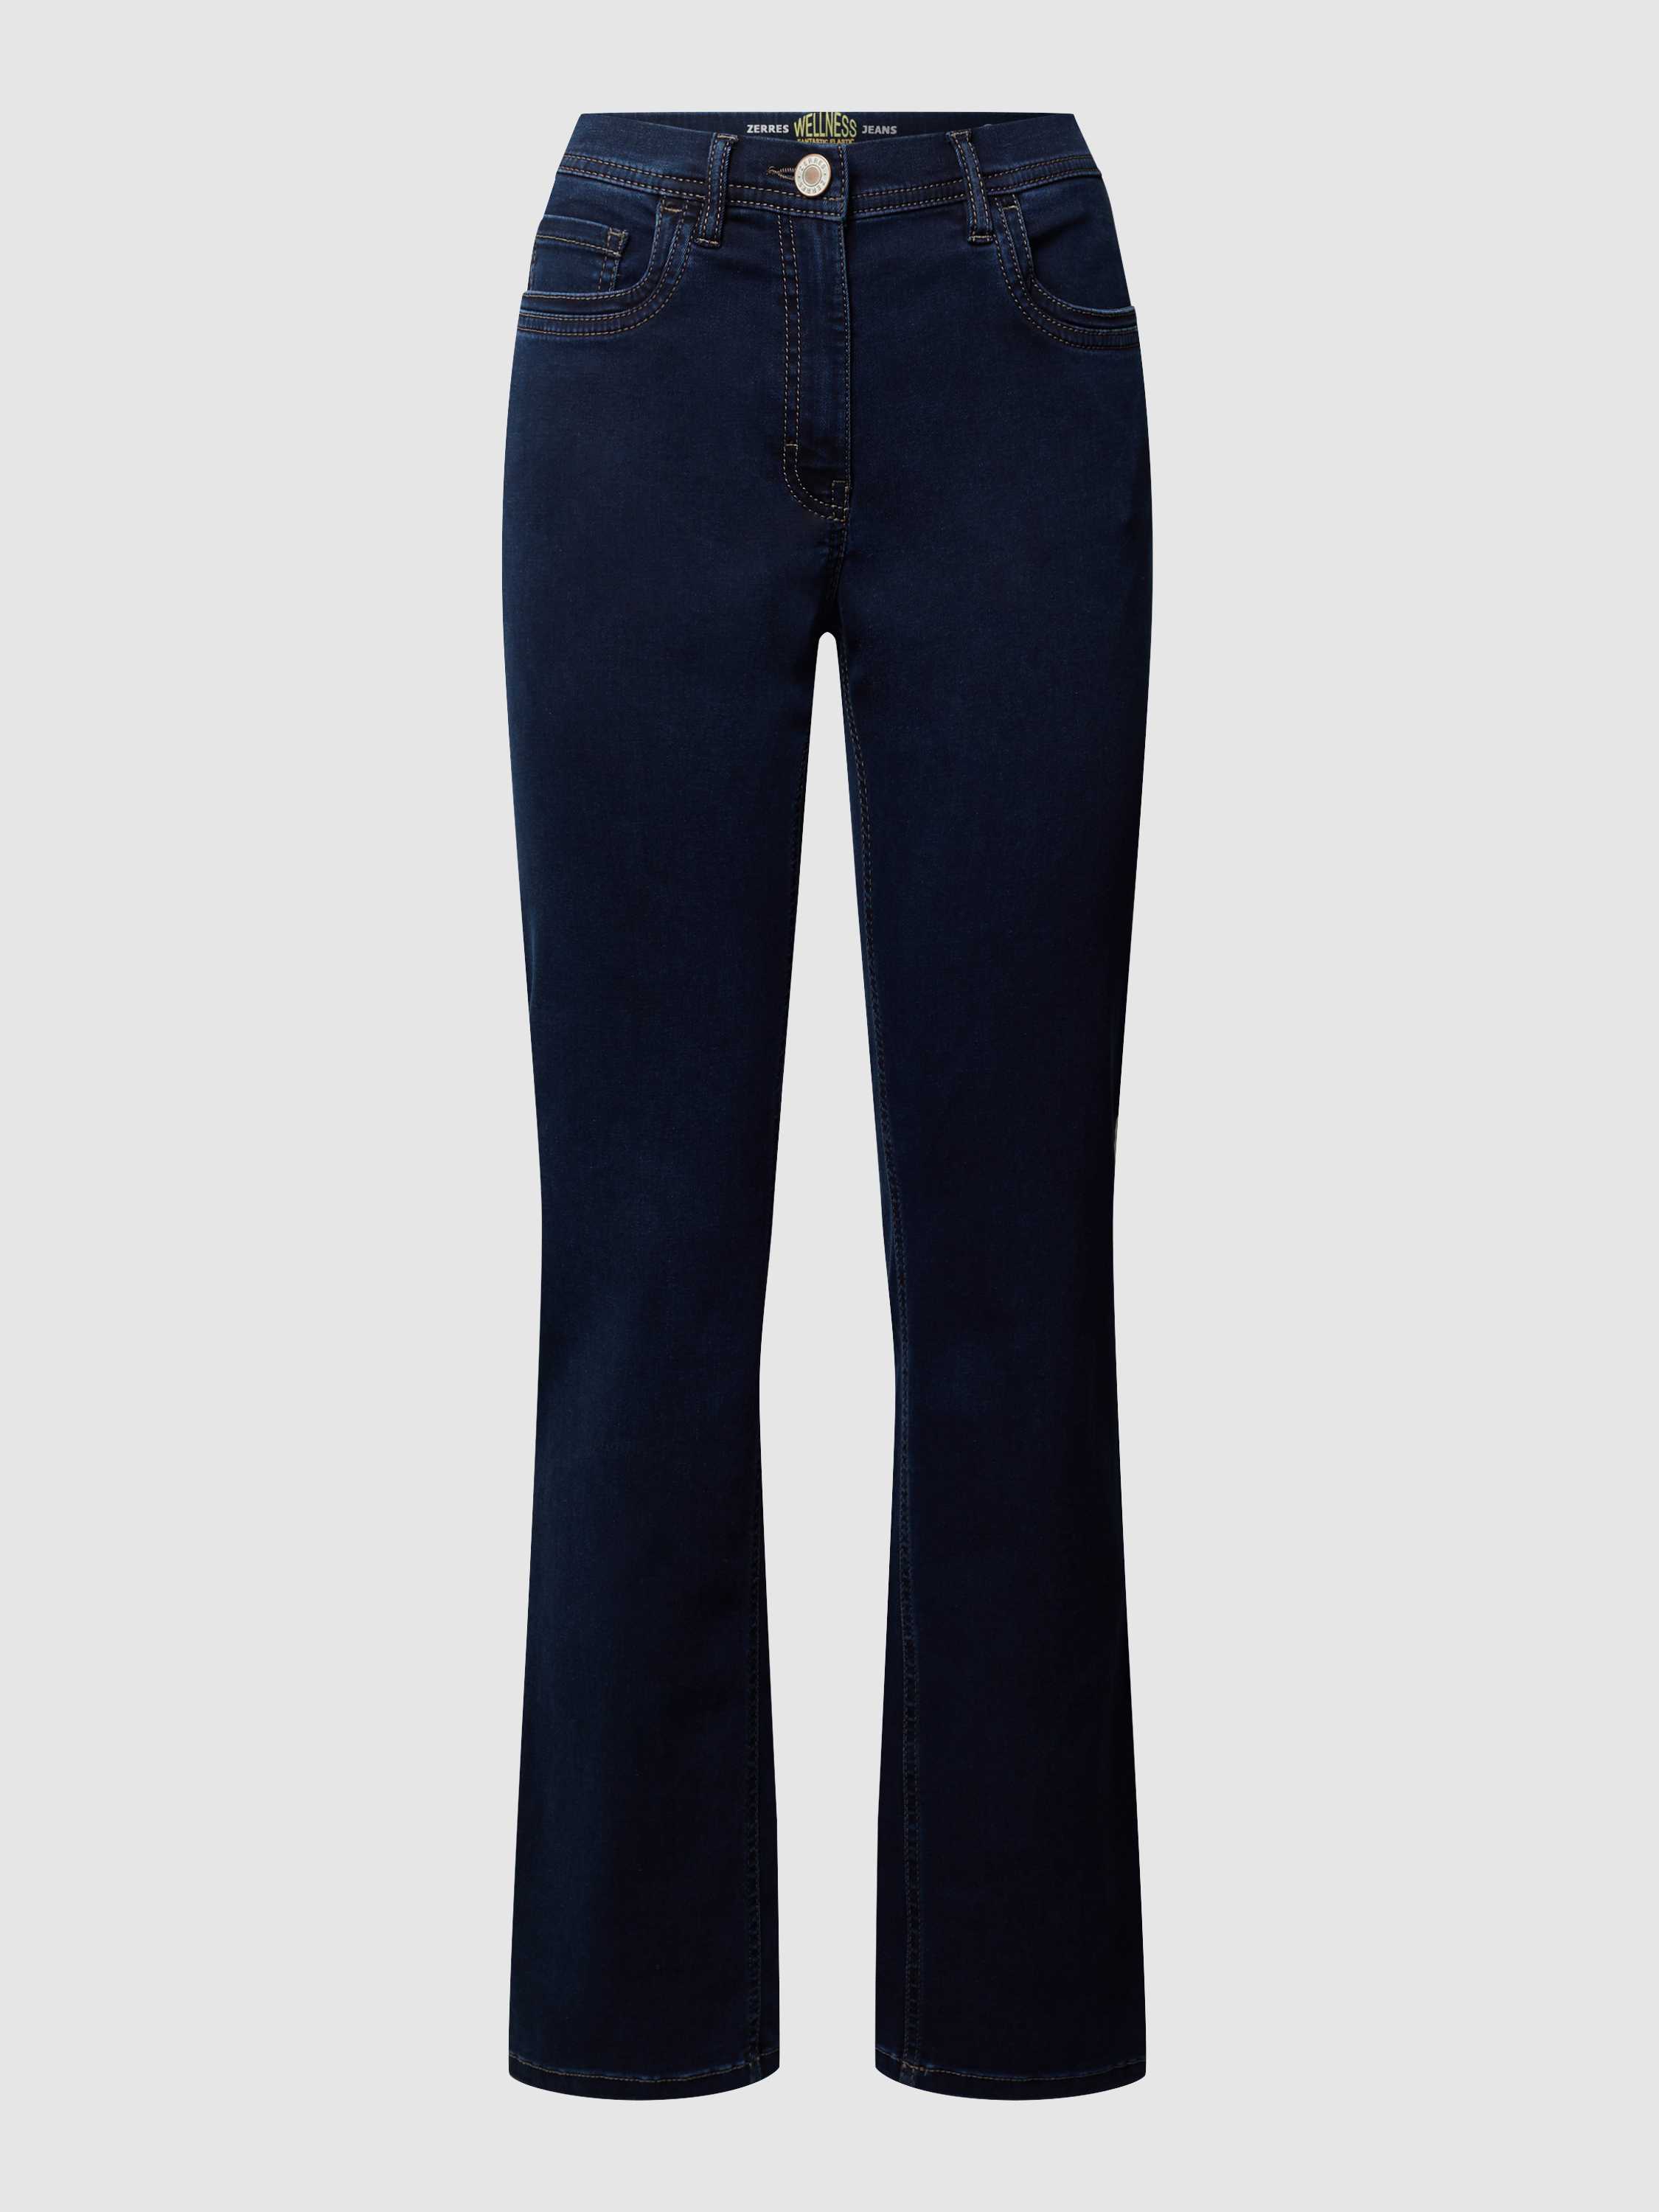 Coloured Straight Fit Jeans Modell GINA, Peek & Cloppenburg